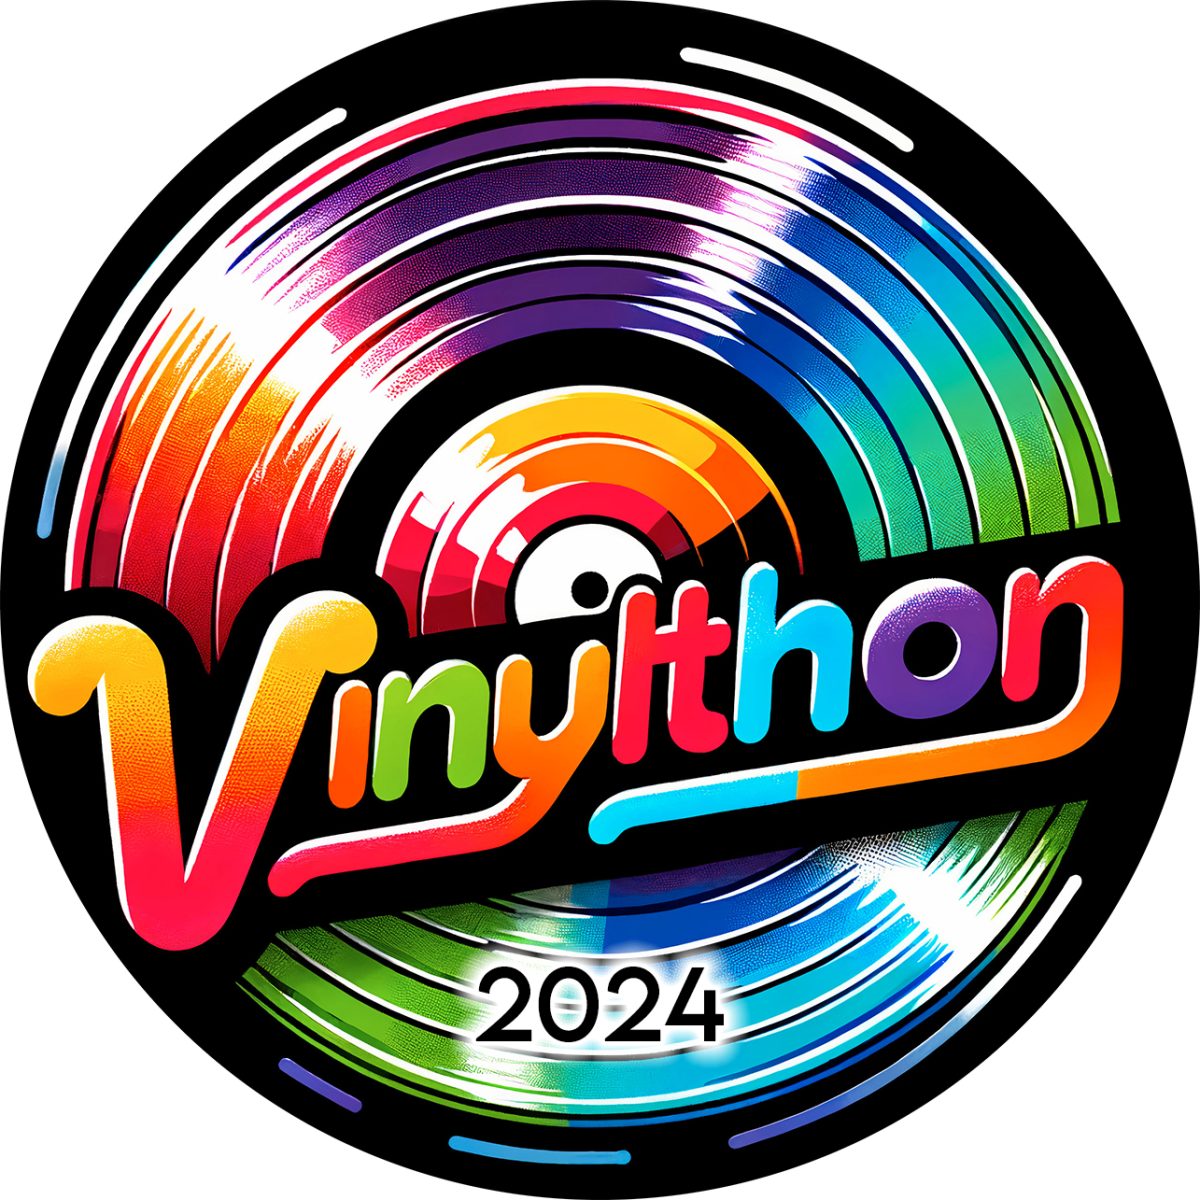 Vinylthon 2024 comes to campus radio station